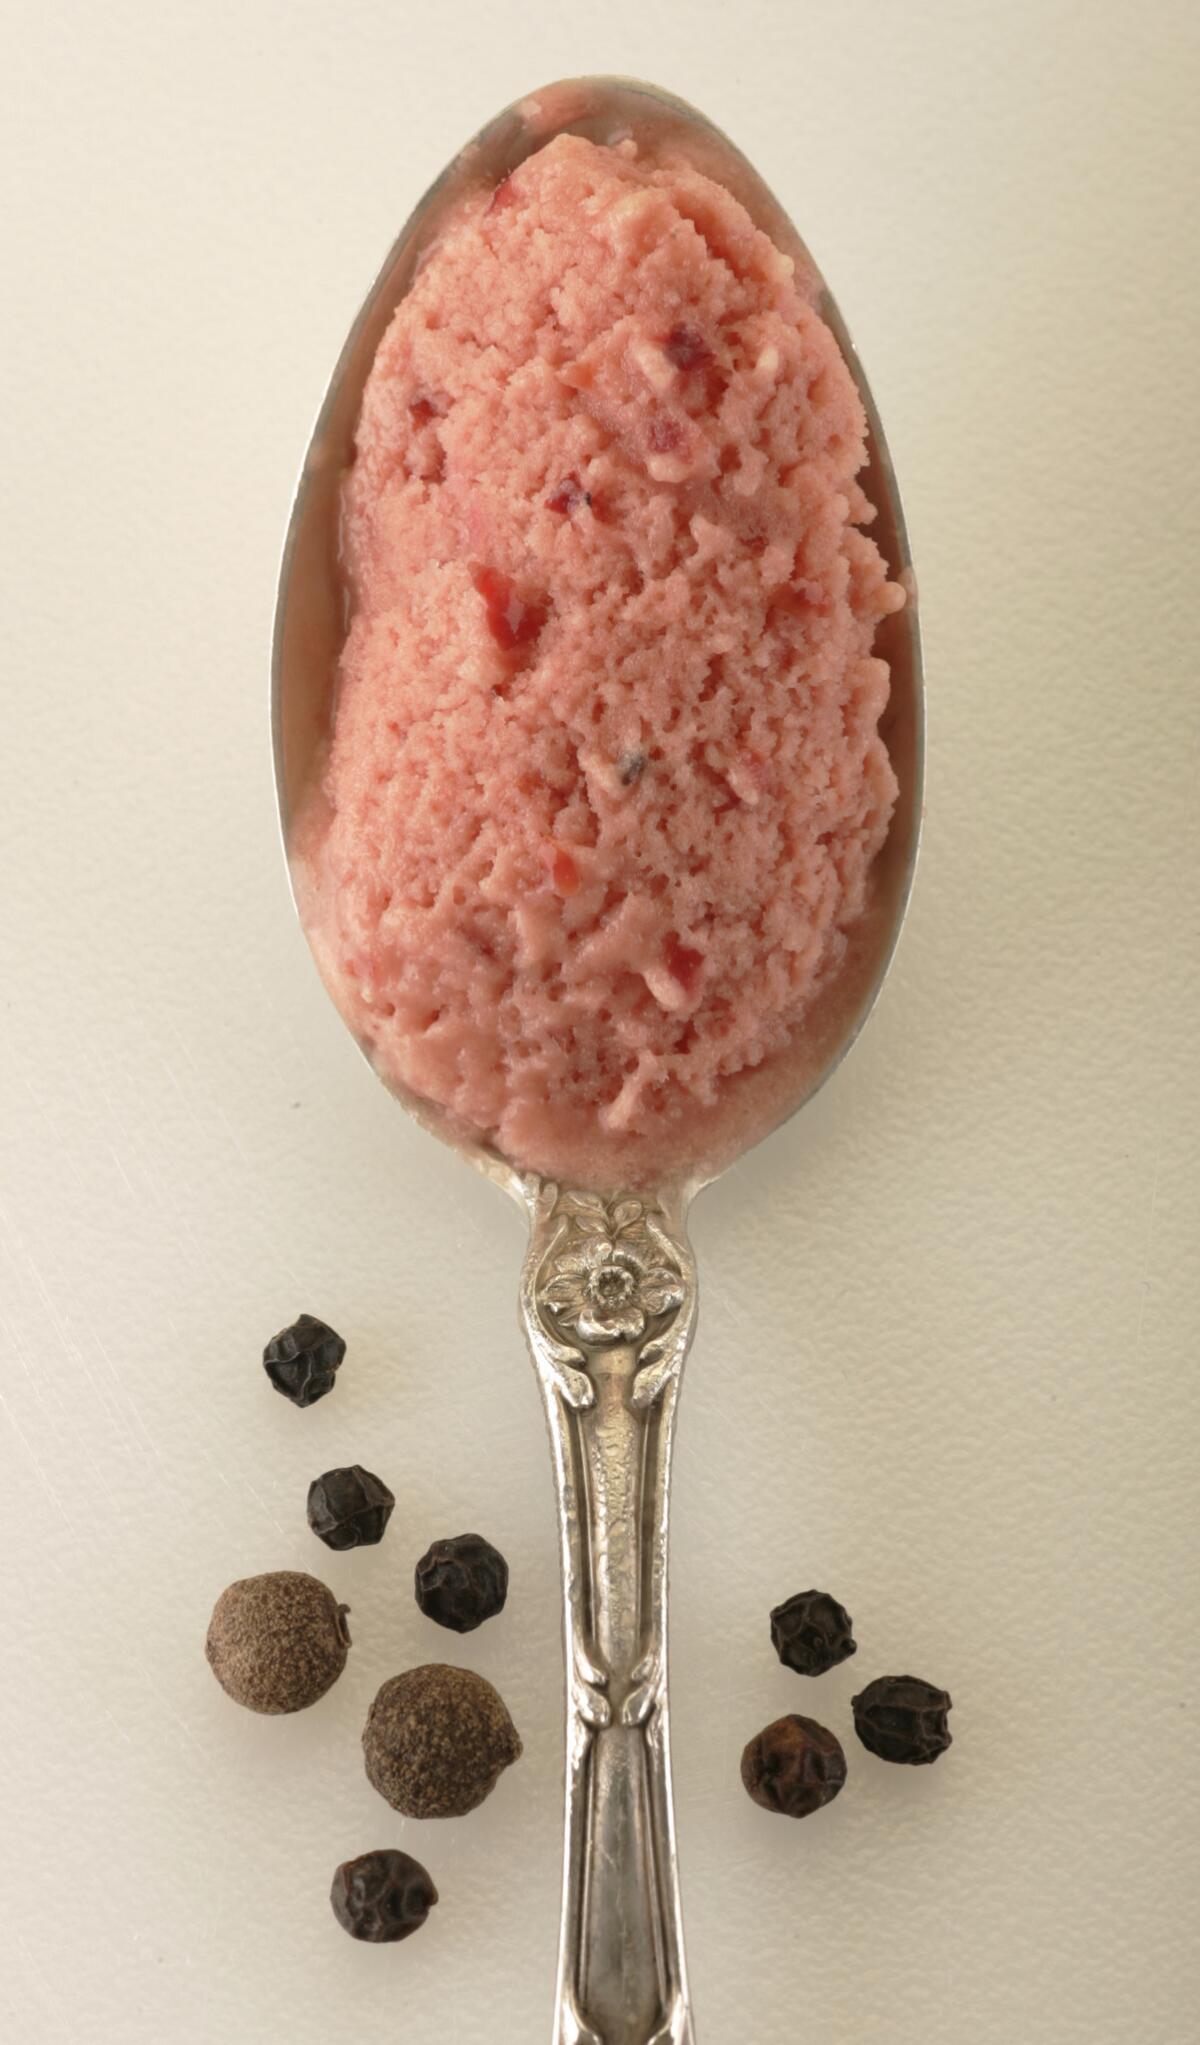 Spiced plum ice cream in a spoon.